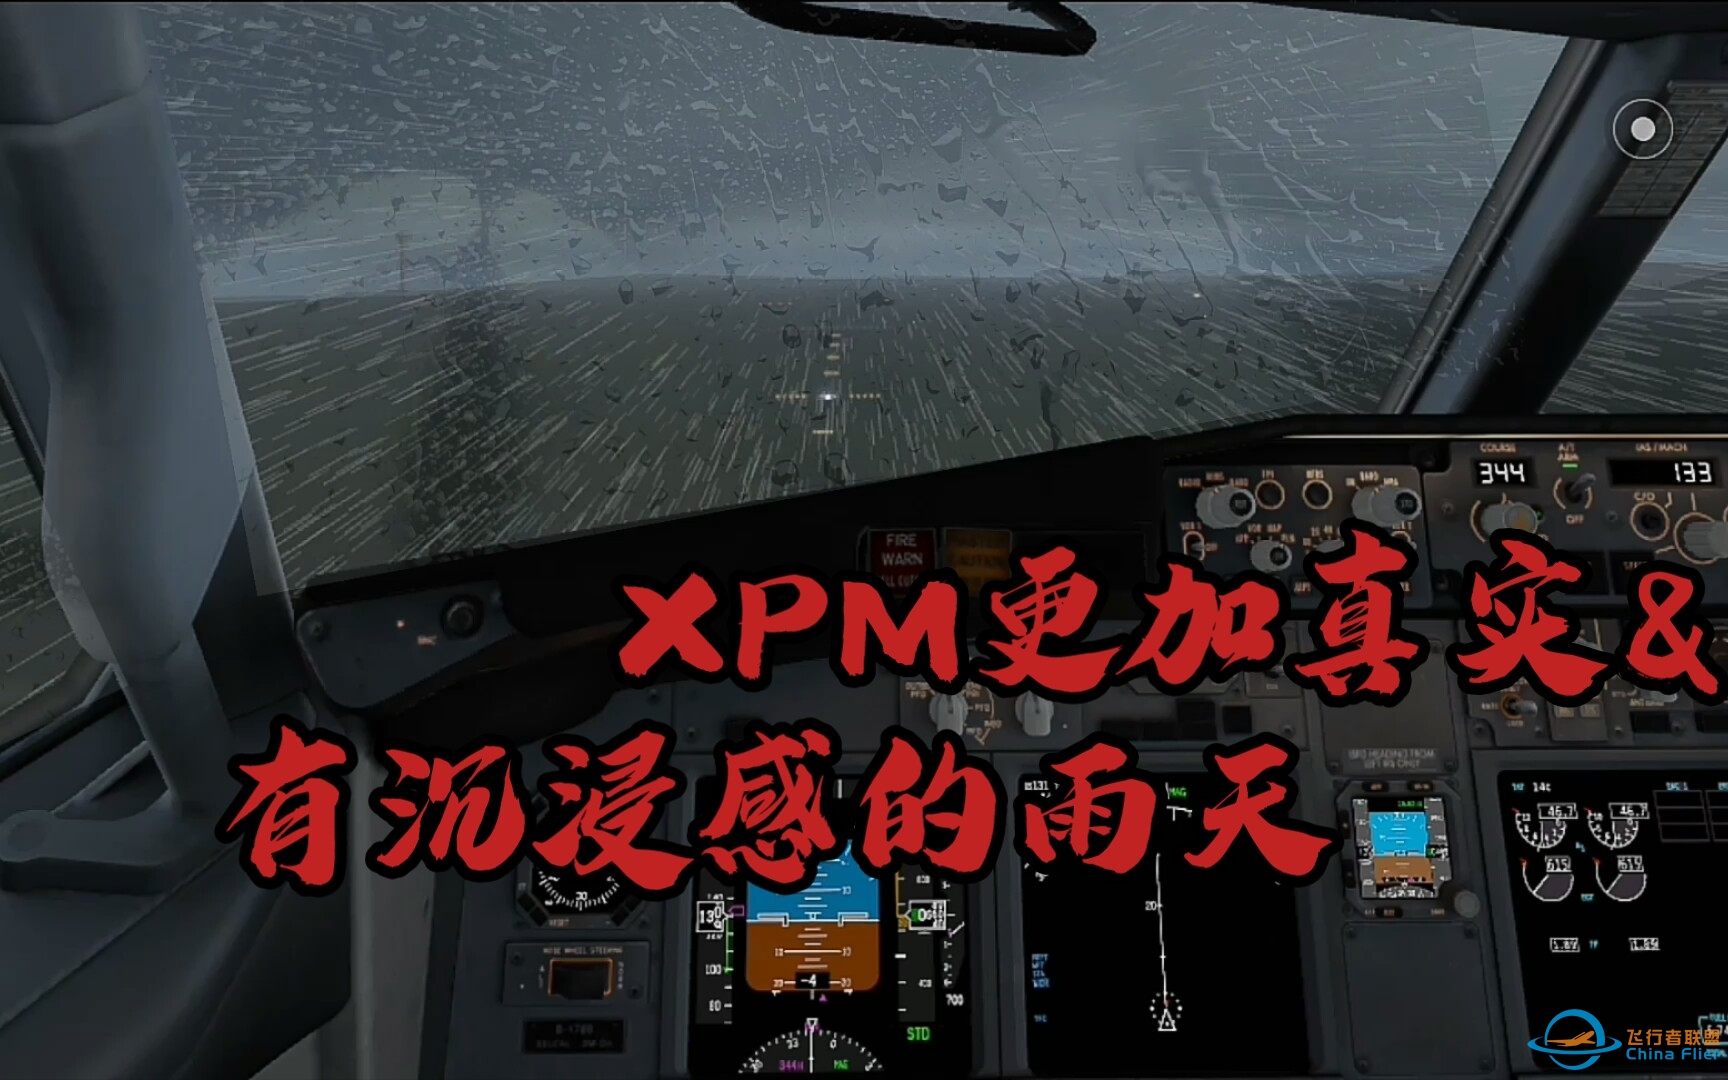 X-PLANE 10 MOBILE 更加真实、有沉浸感的雨天-9365 